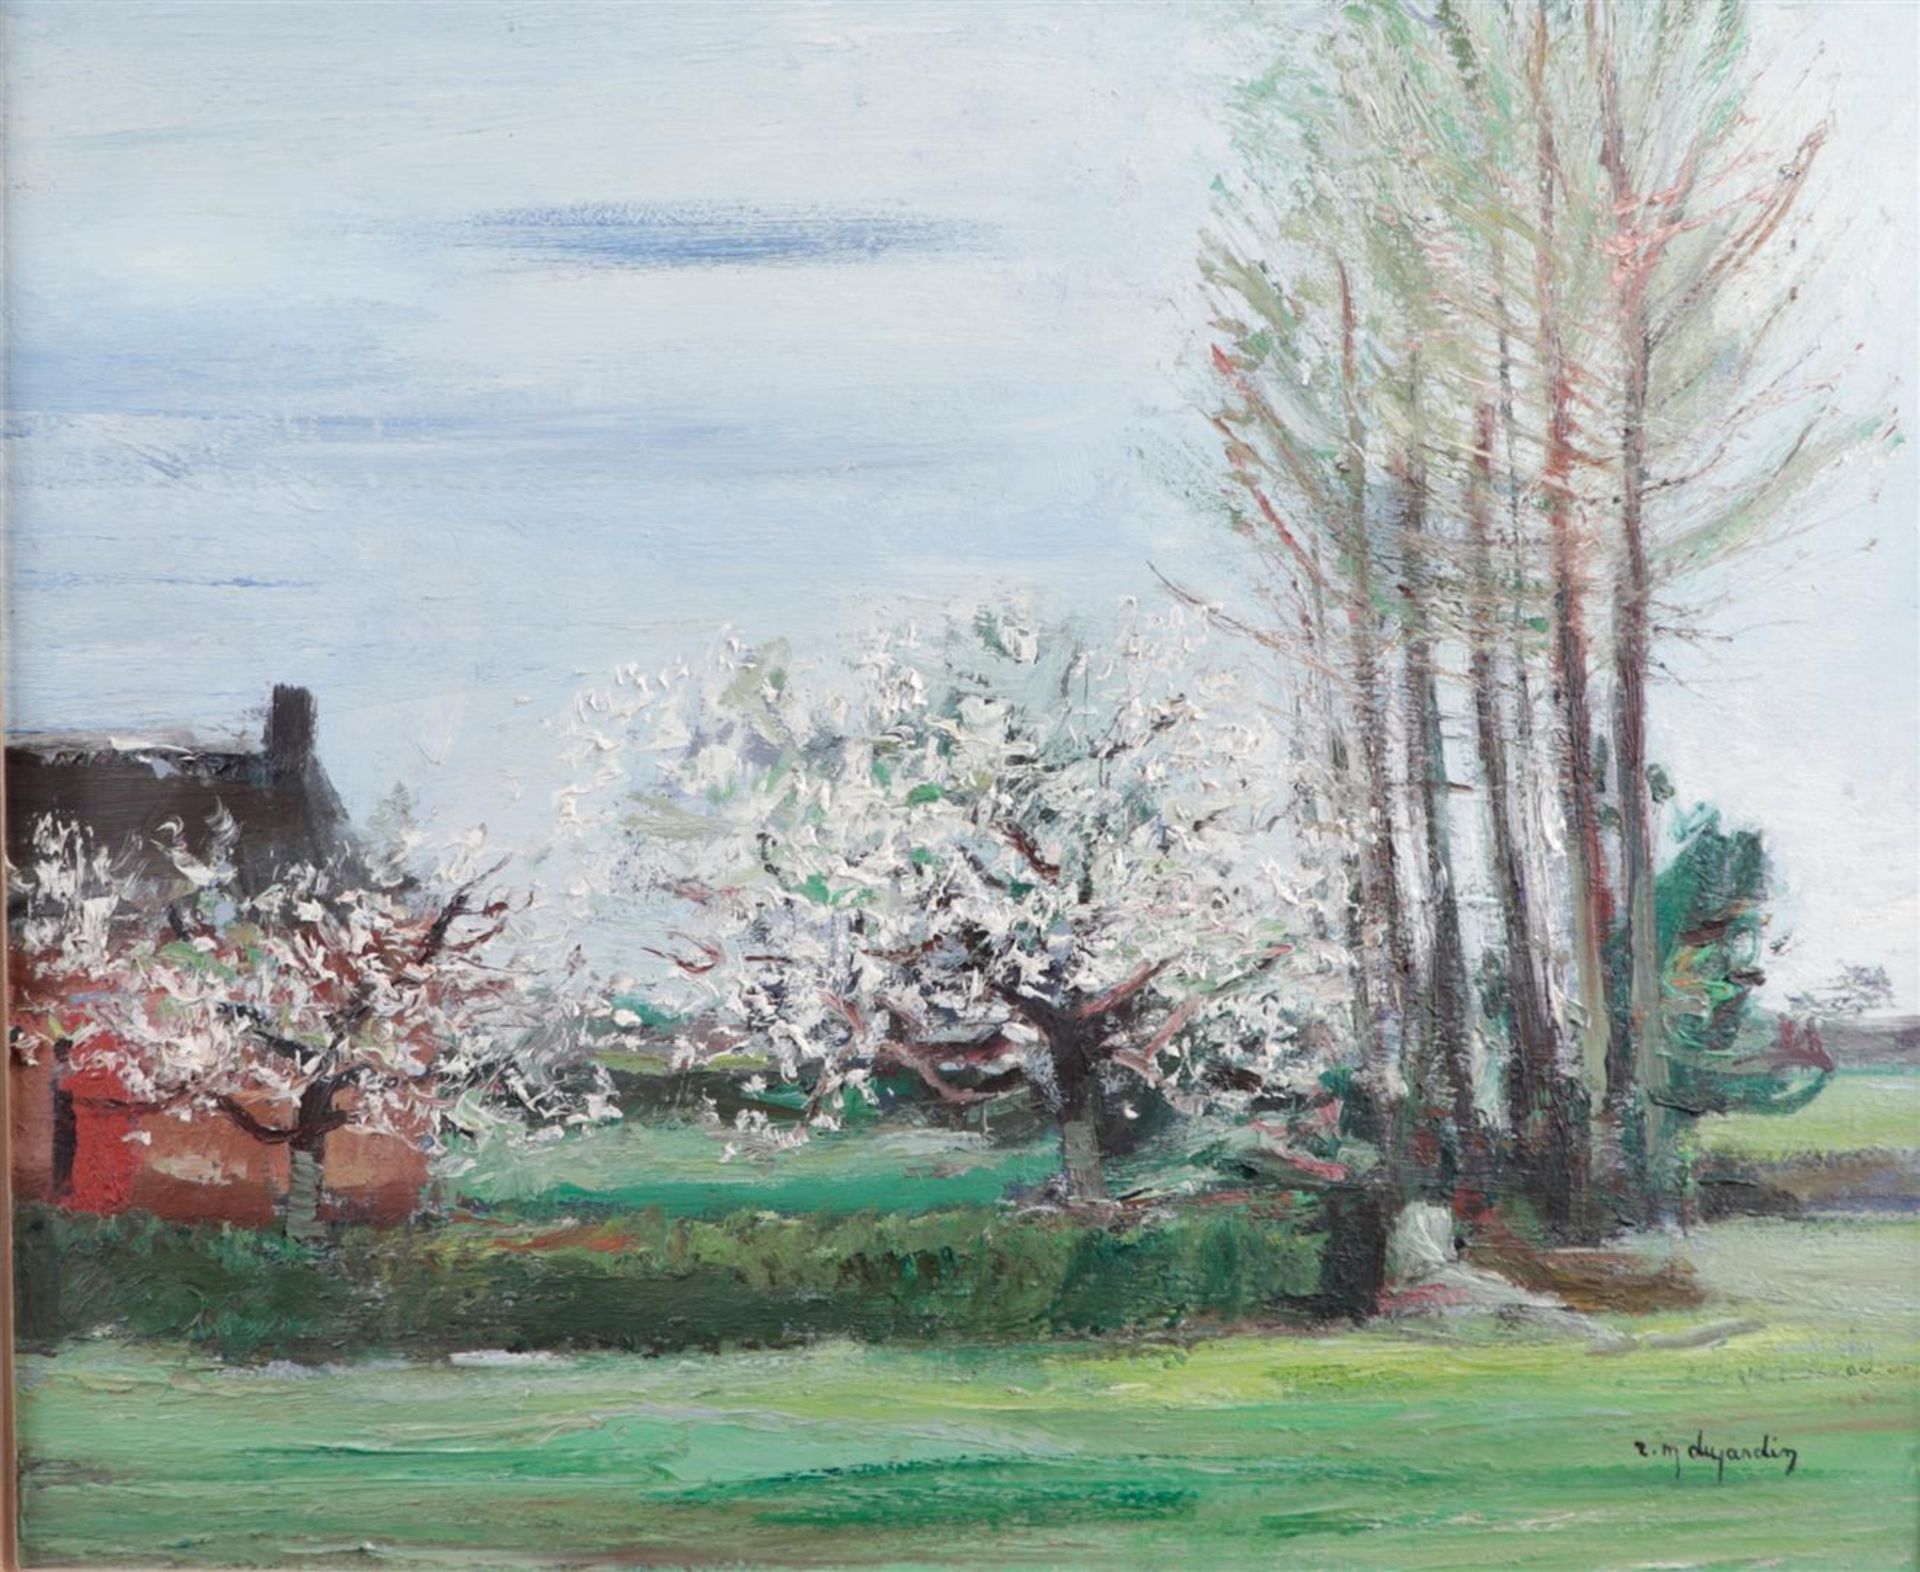 R. M. Dujardin, 20th century, Landscape with blossoms, oil on canvas,
50 x 60 cm.